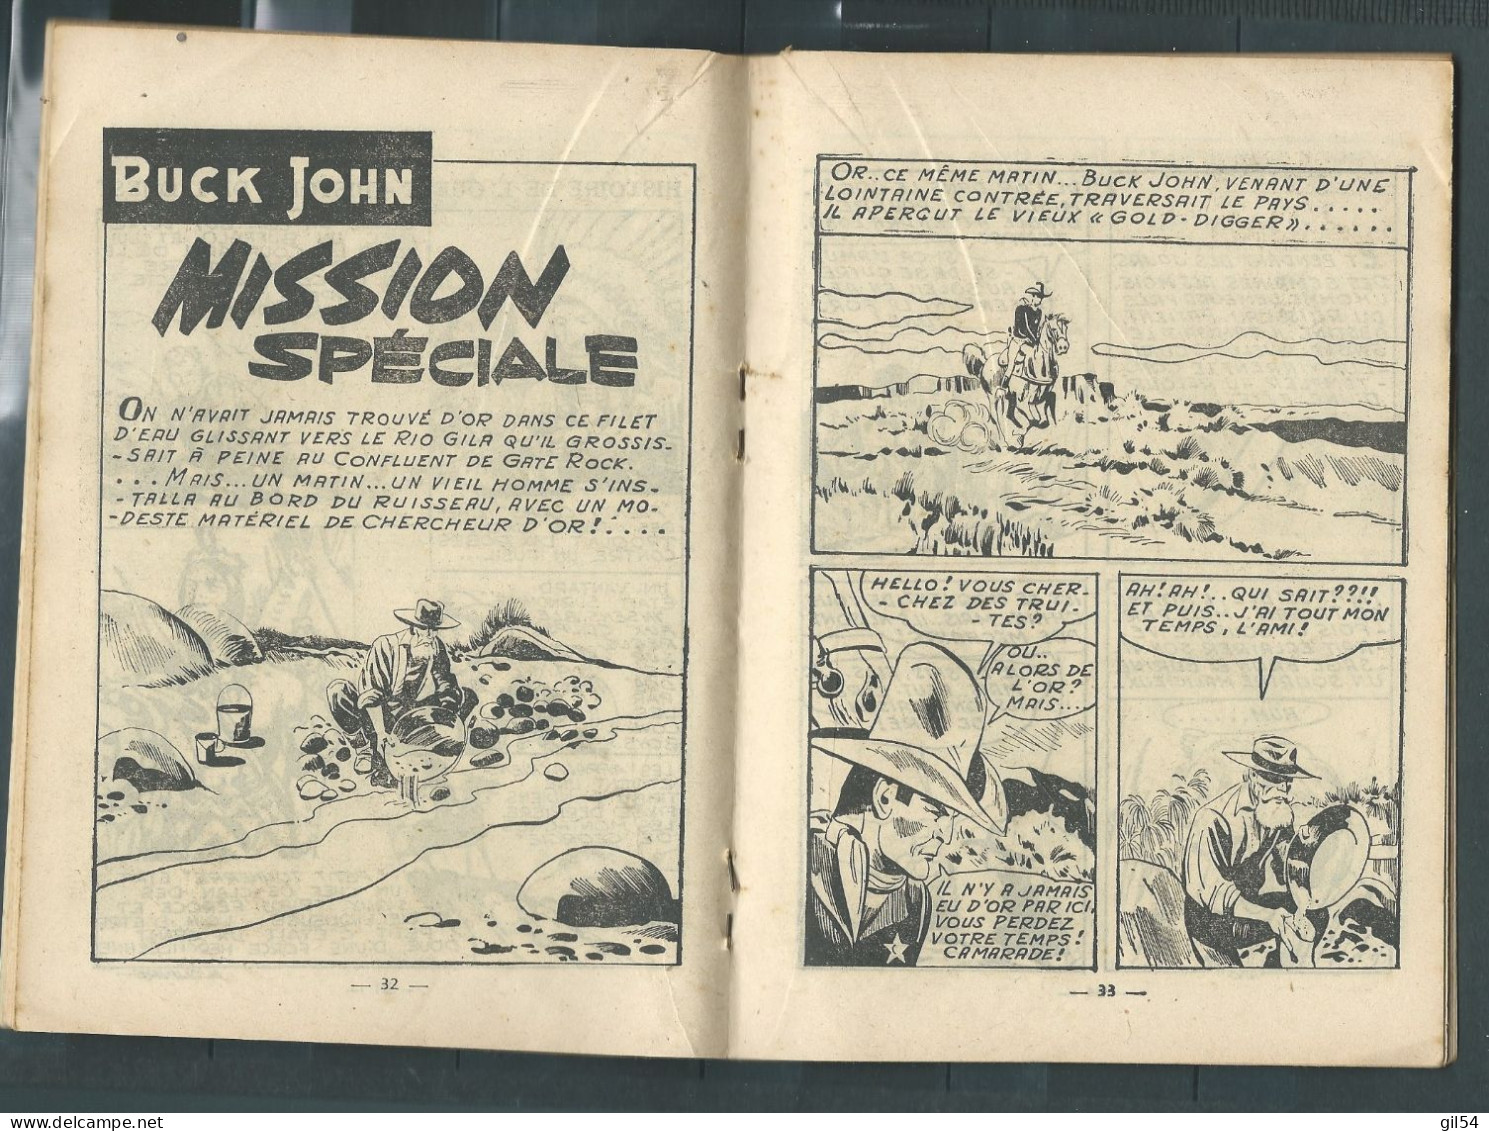 Bd " Buck John   " Bimensuel N° 177  "   Convoi Stoppé à Indiaskeepee     , DL  N° 40  1954 - BE-   BUC 1002 - Petit Format